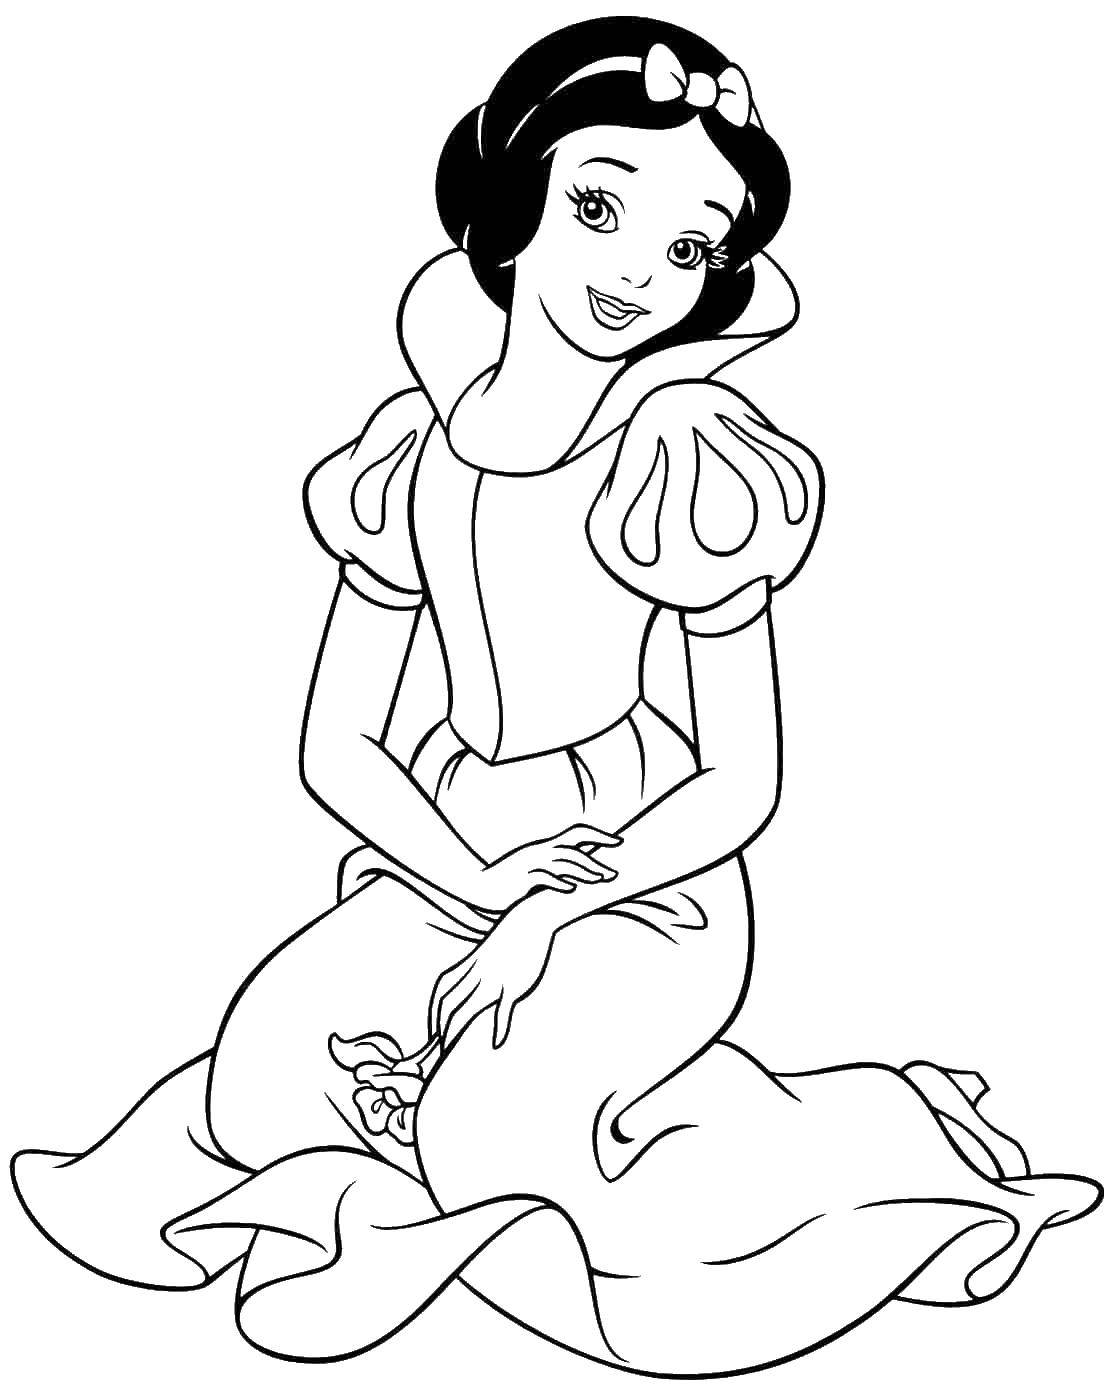 Coloring Snow white with flower. Category Princess. Tags:  Princess , Snow white.